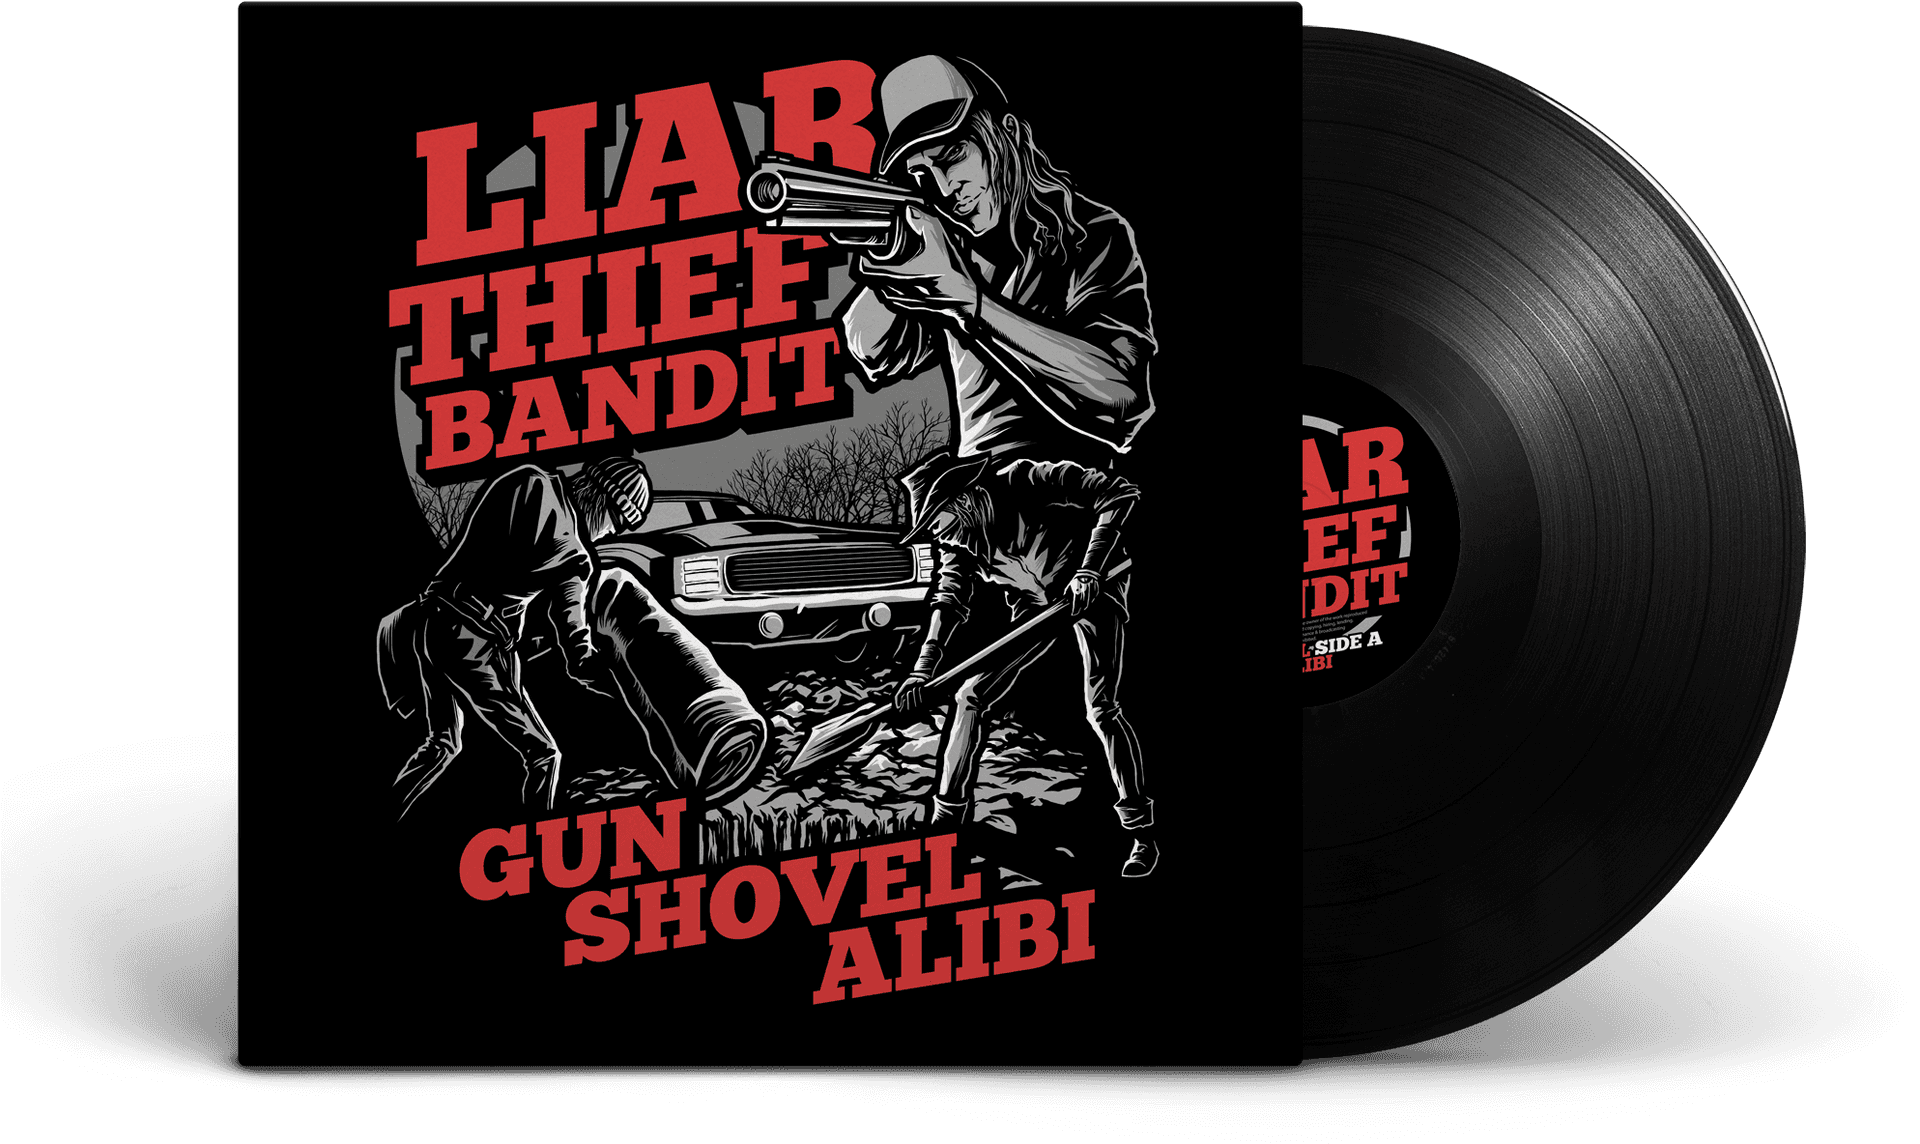 Liar Thief Bandit Vinyl Cover PNG